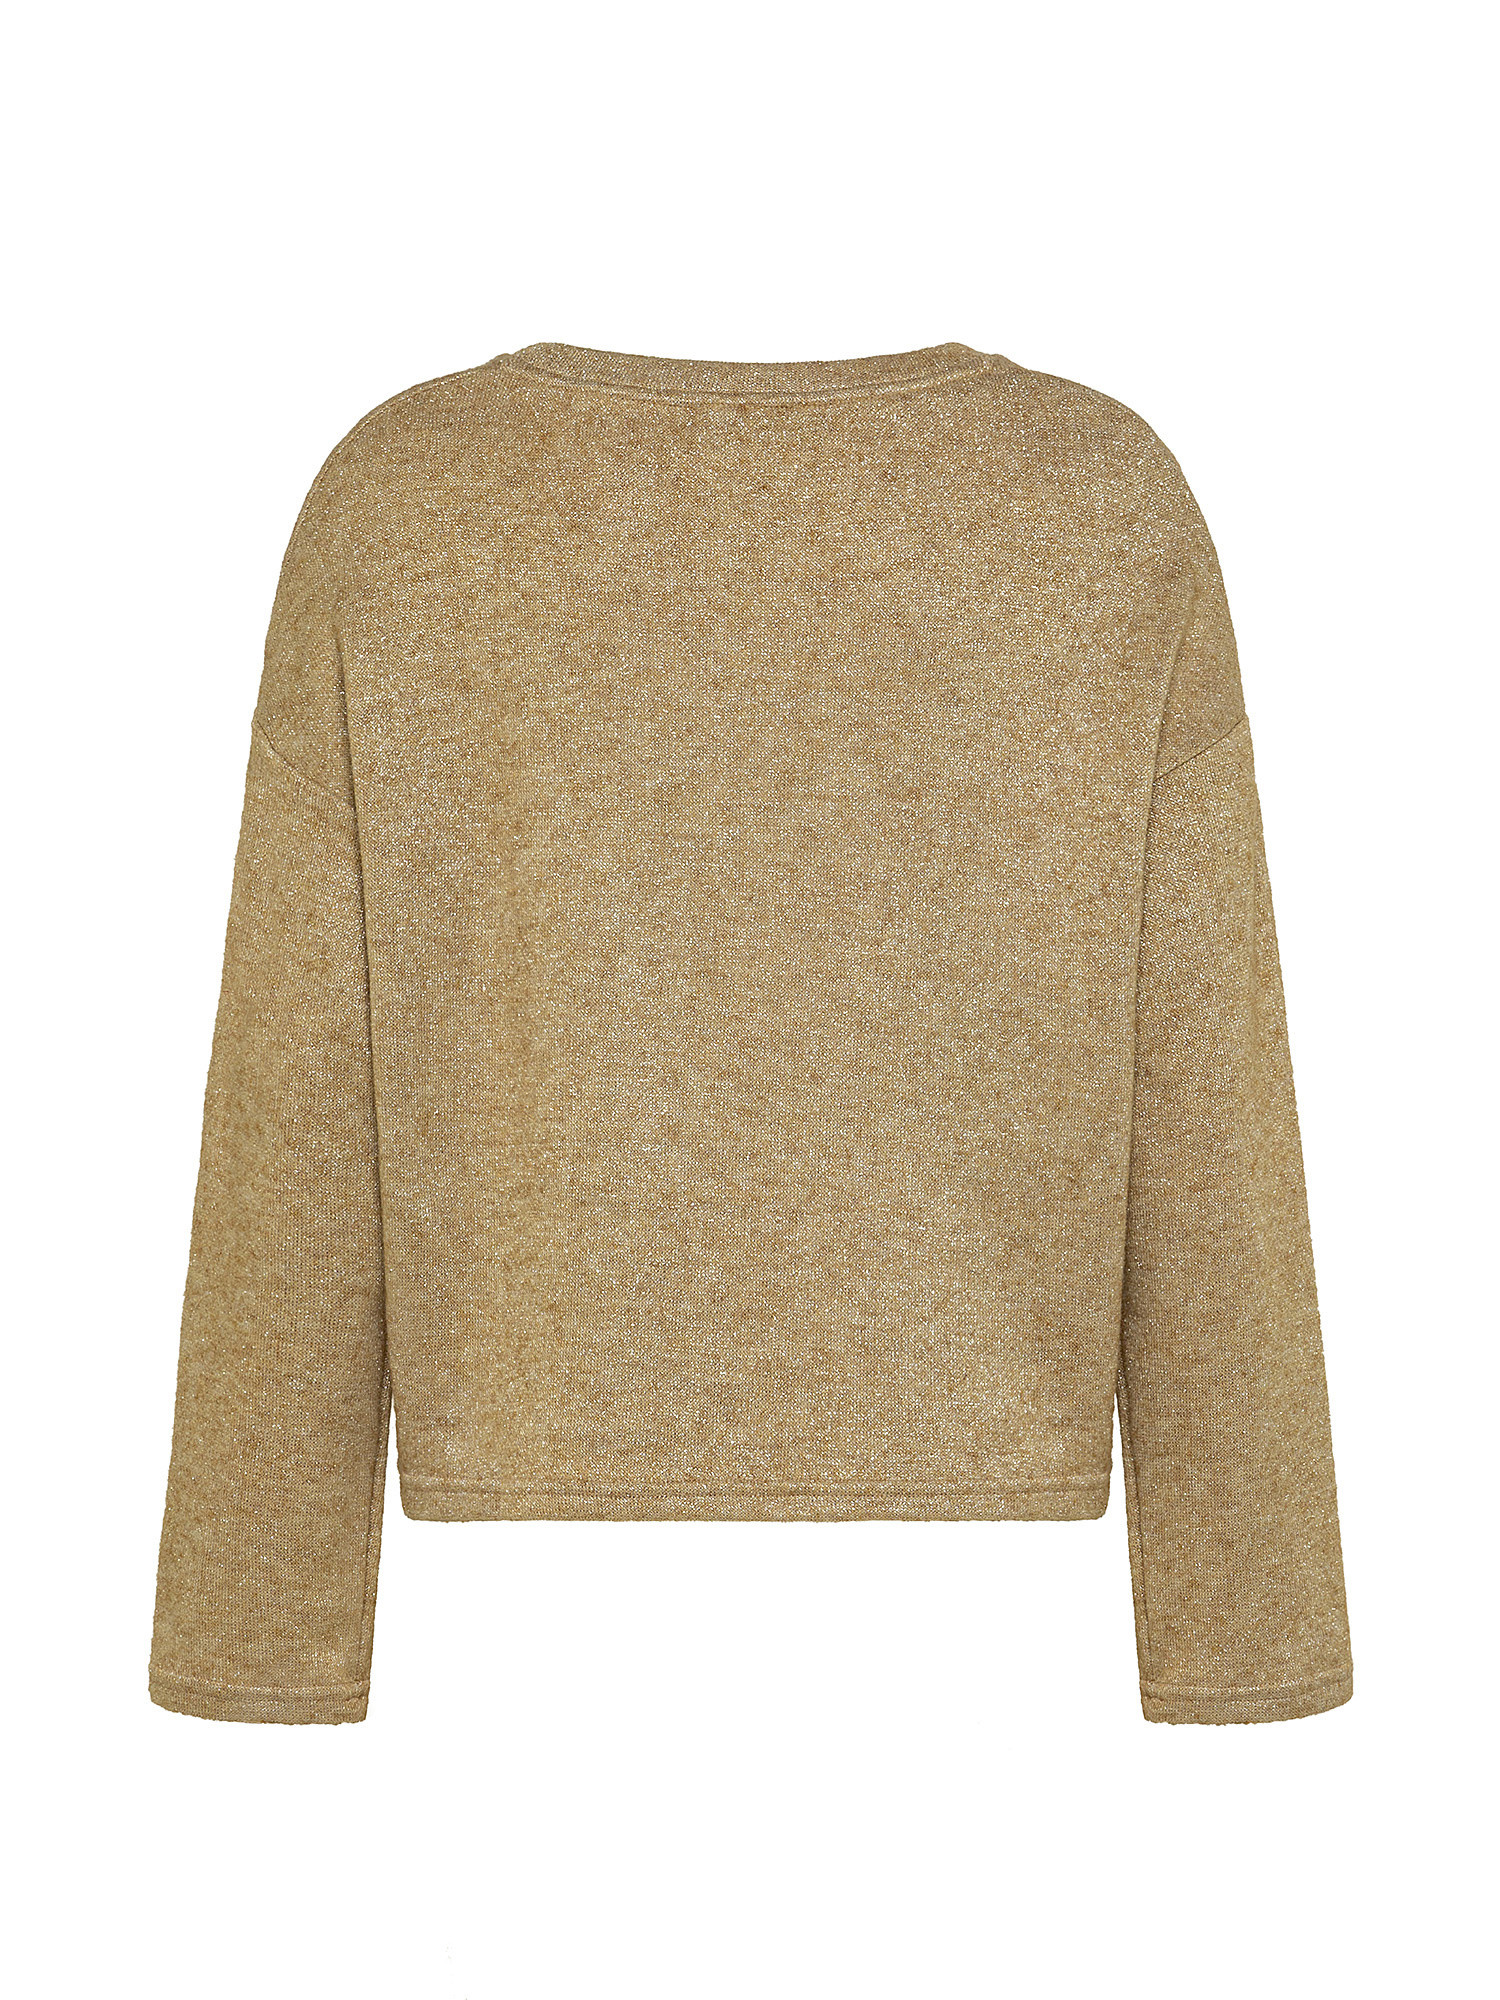 Oversized sweater in lurex fleece, Beige, large image number 1